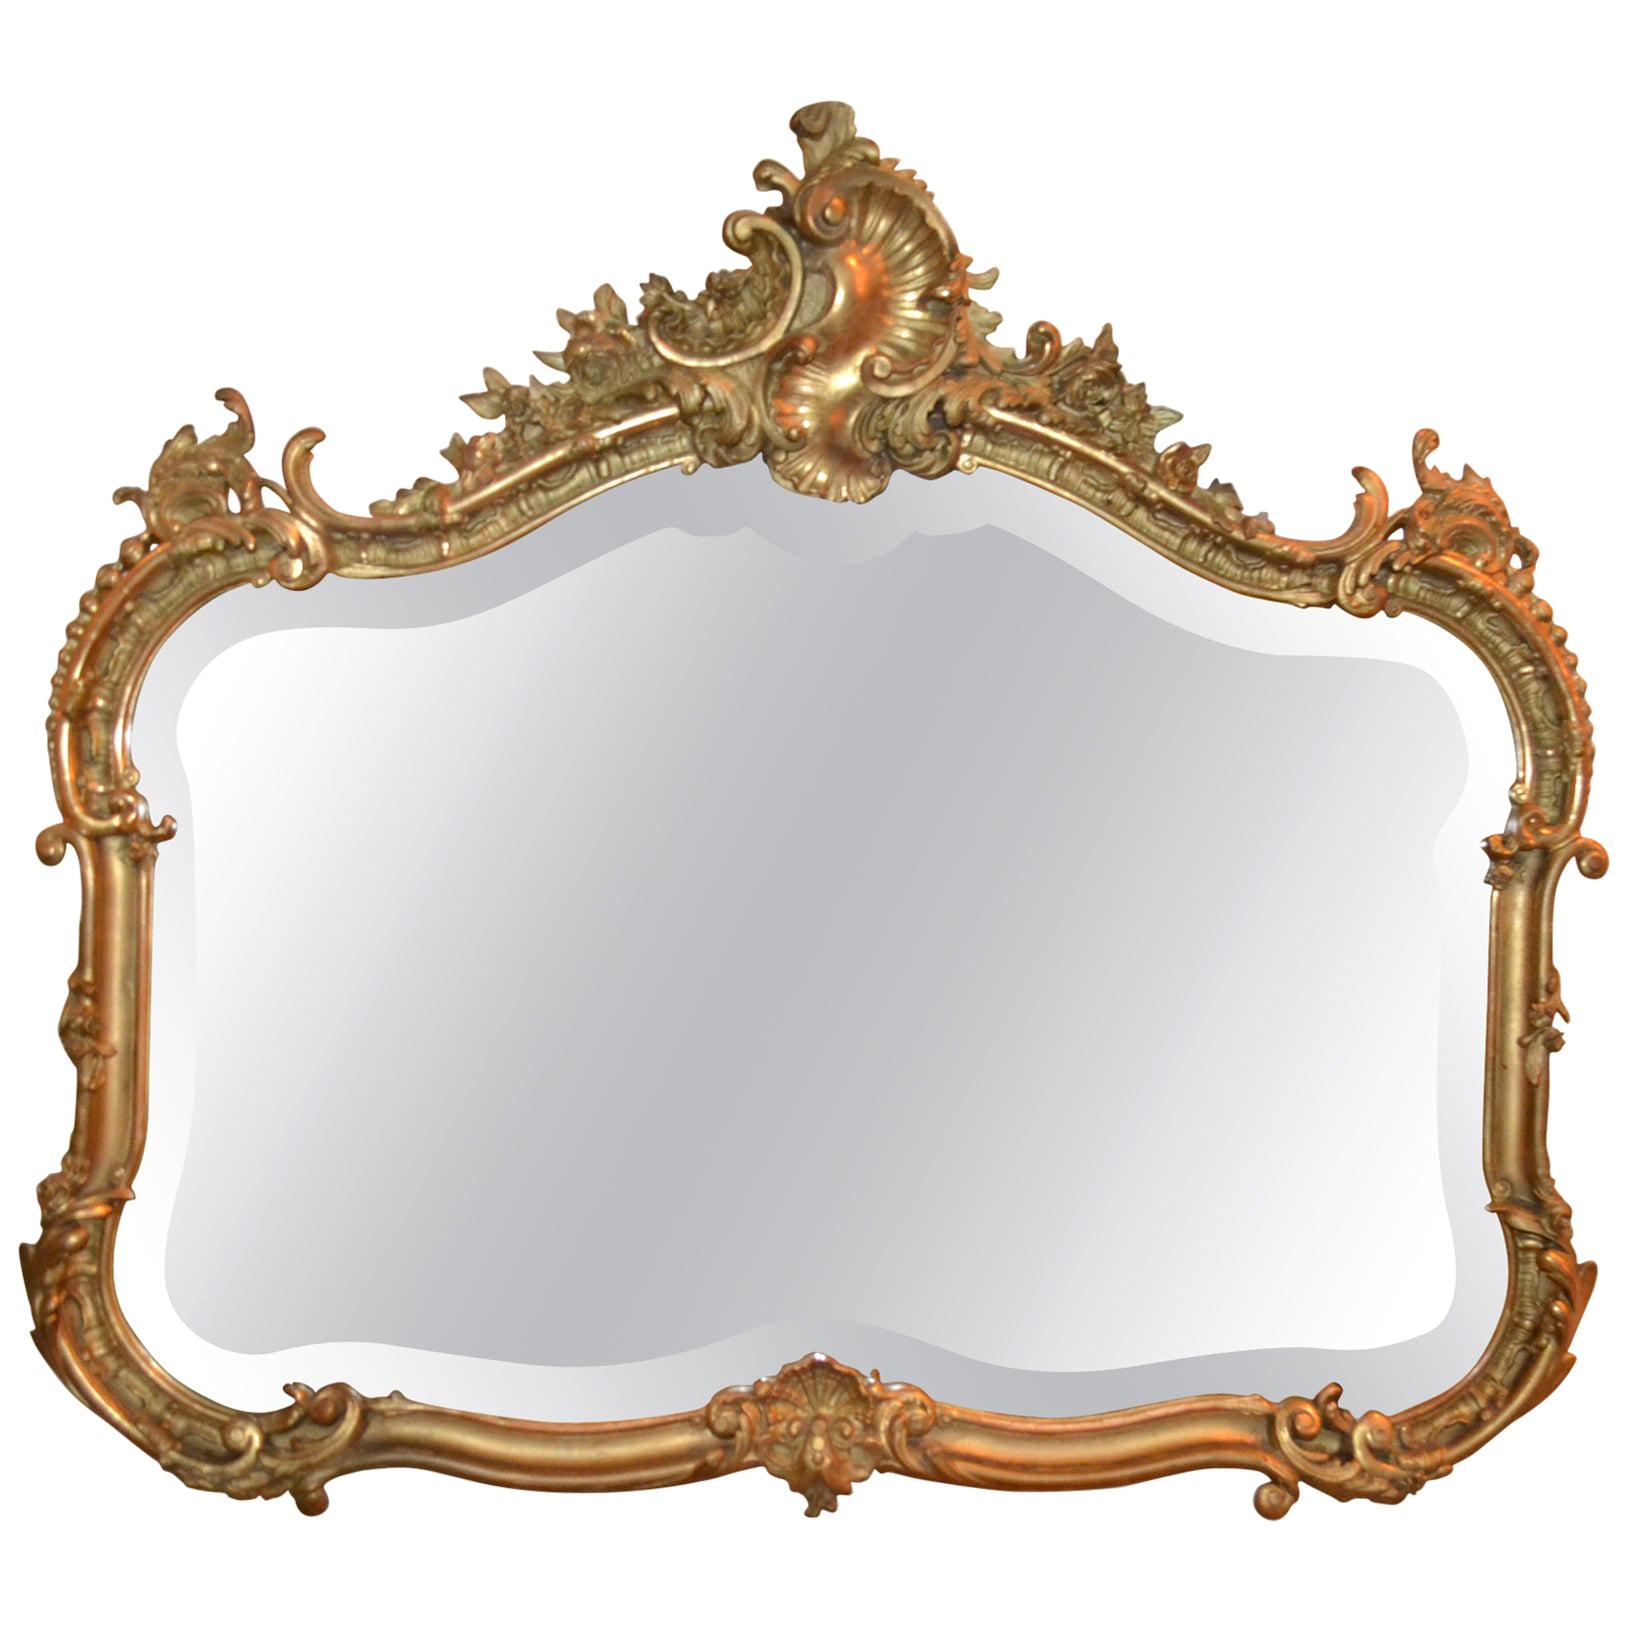 Antique French Gold Leaf Beveled Mirror, circa 1855-1865